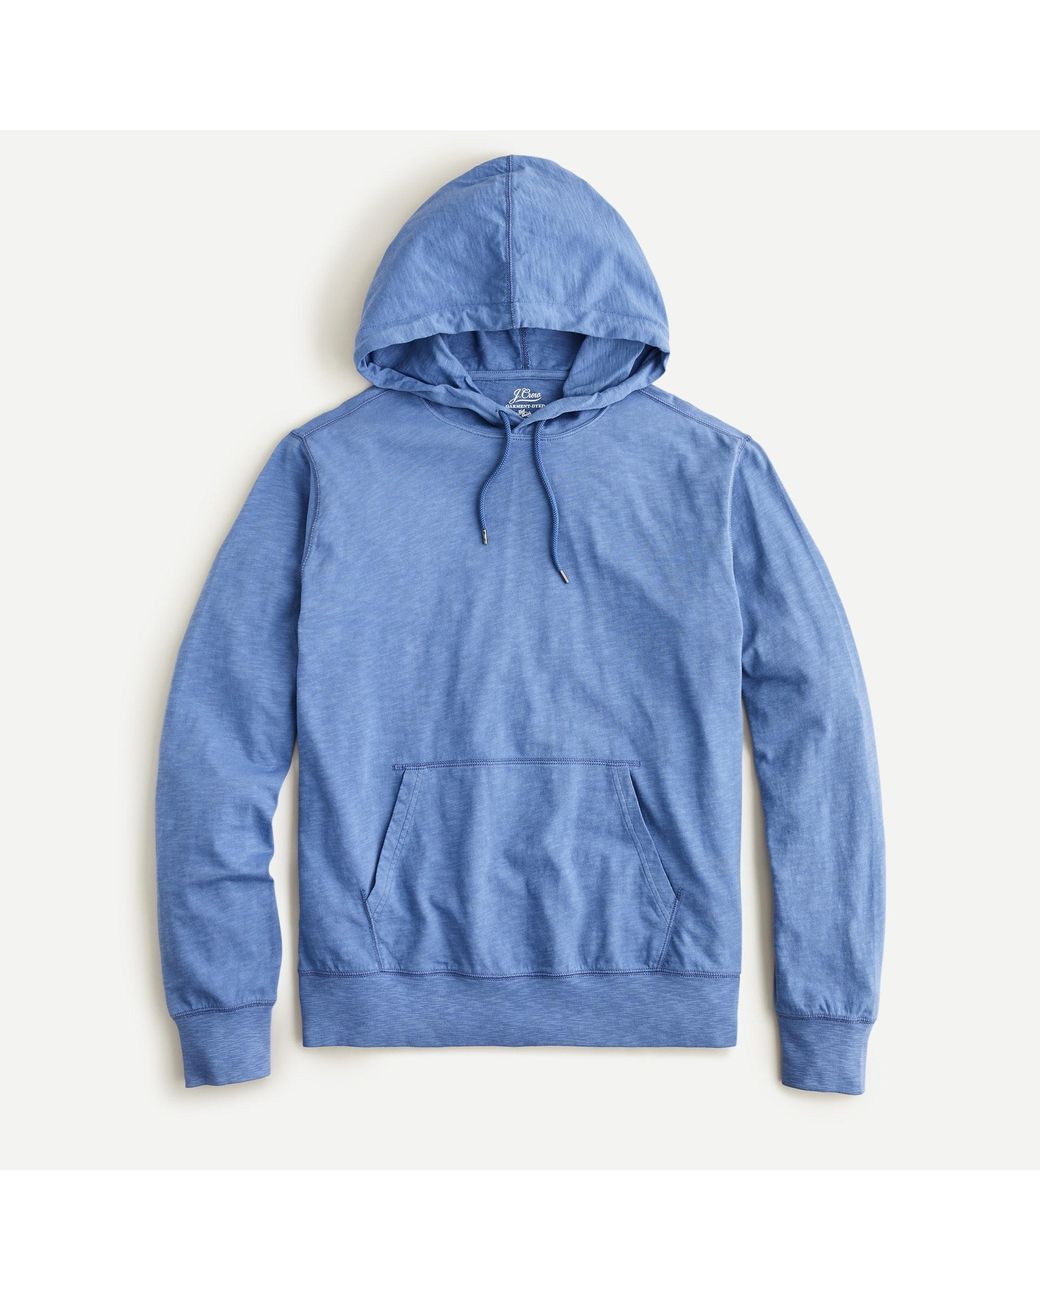 J.Crew Garment-dyed Slub Cotton Hoodie in Blue for Men - Lyst